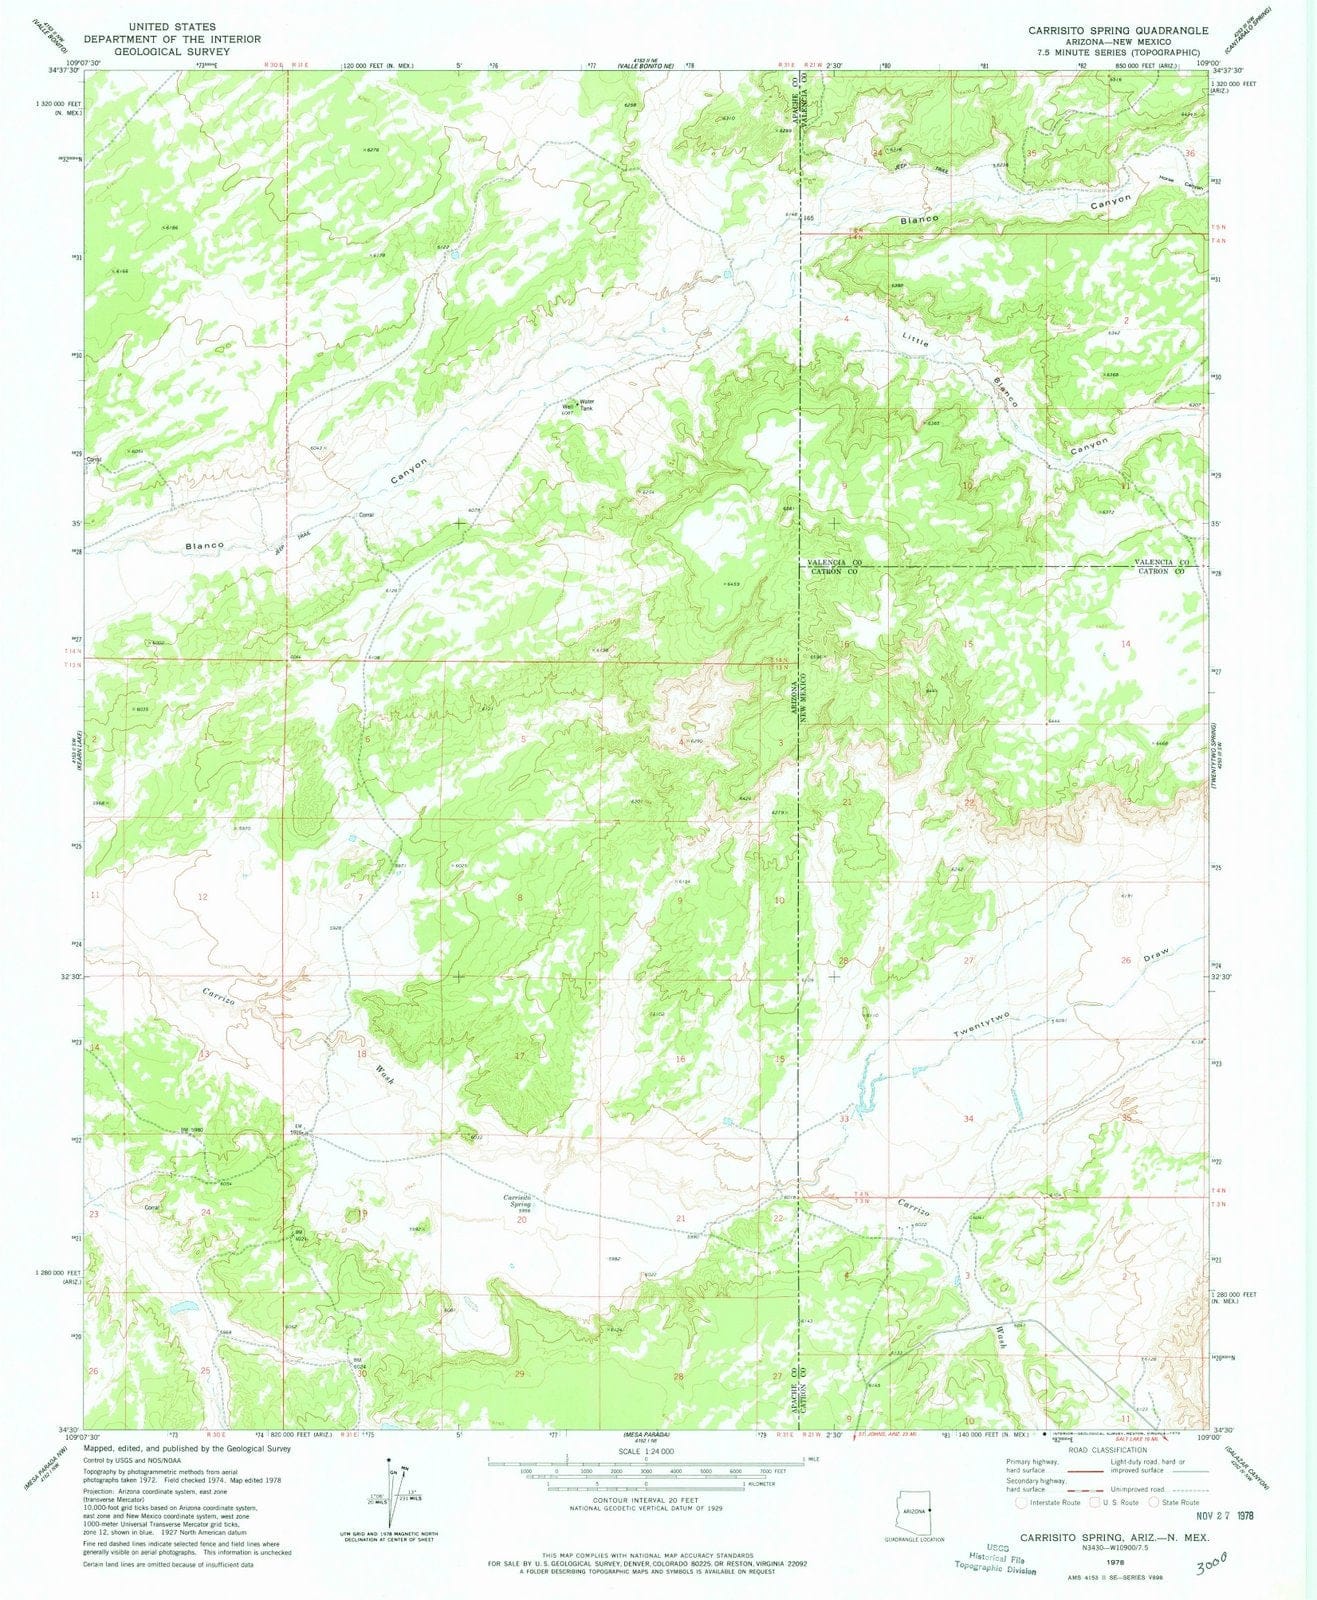 1978 Carrisito Spring, AZ - Arizona - USGS Topographic Map